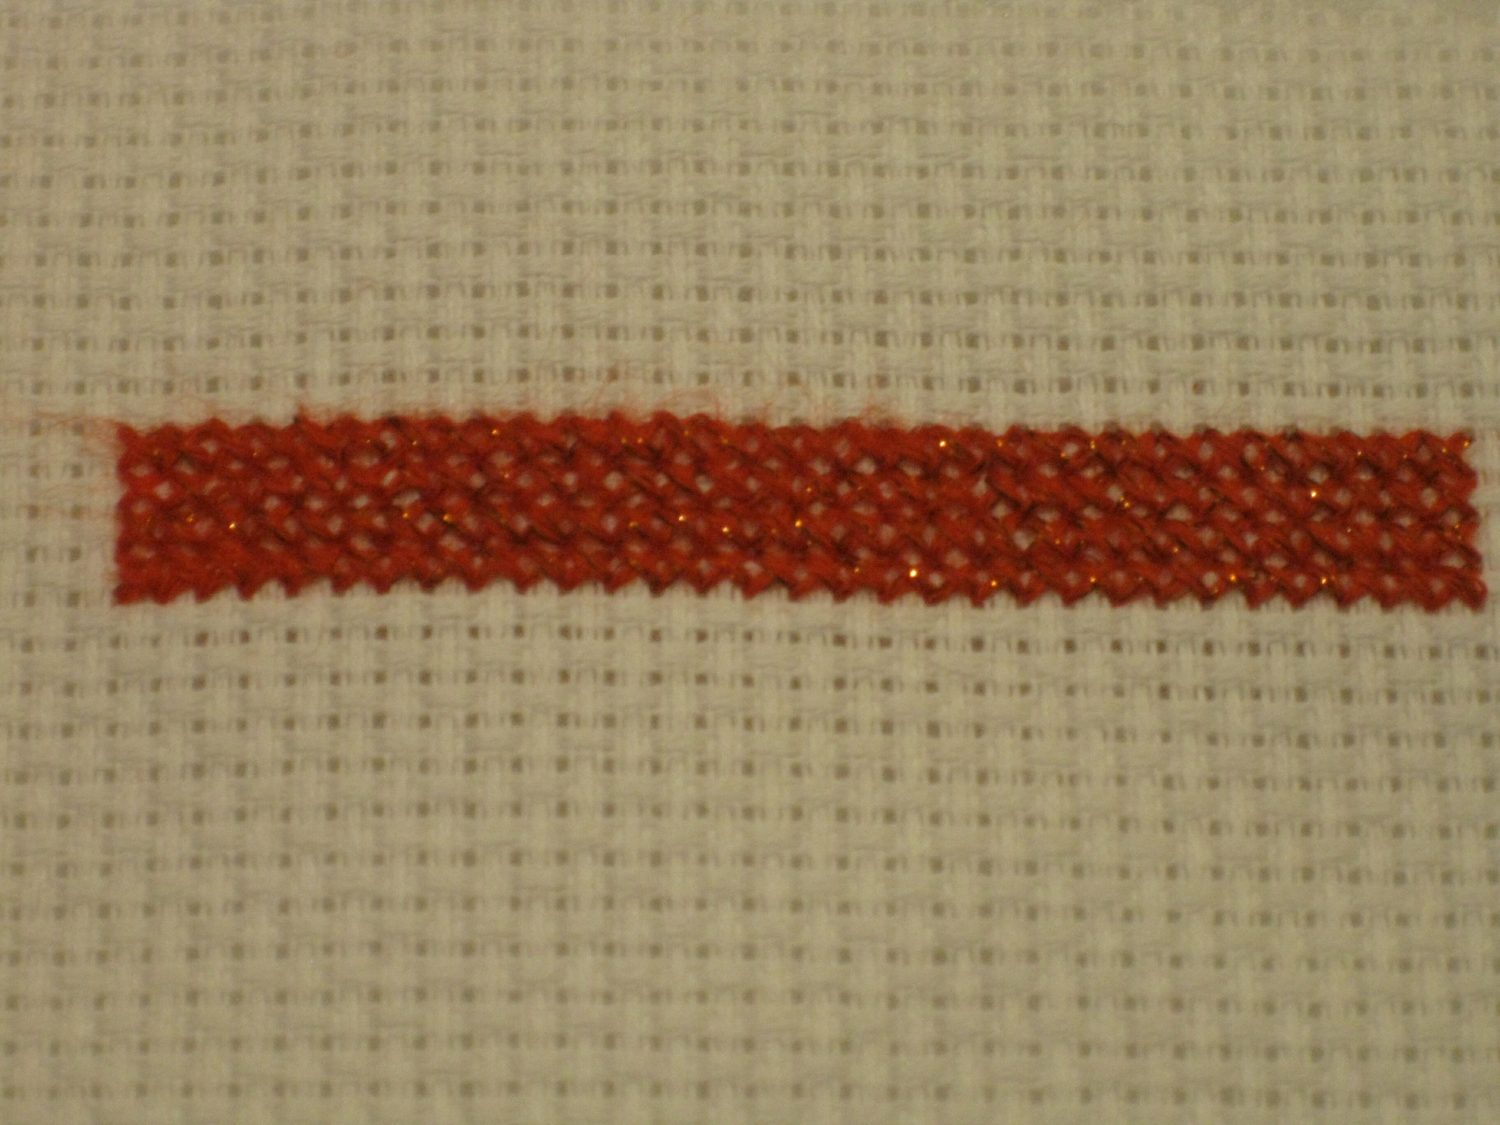 Sample Stitching of DMC Etoile